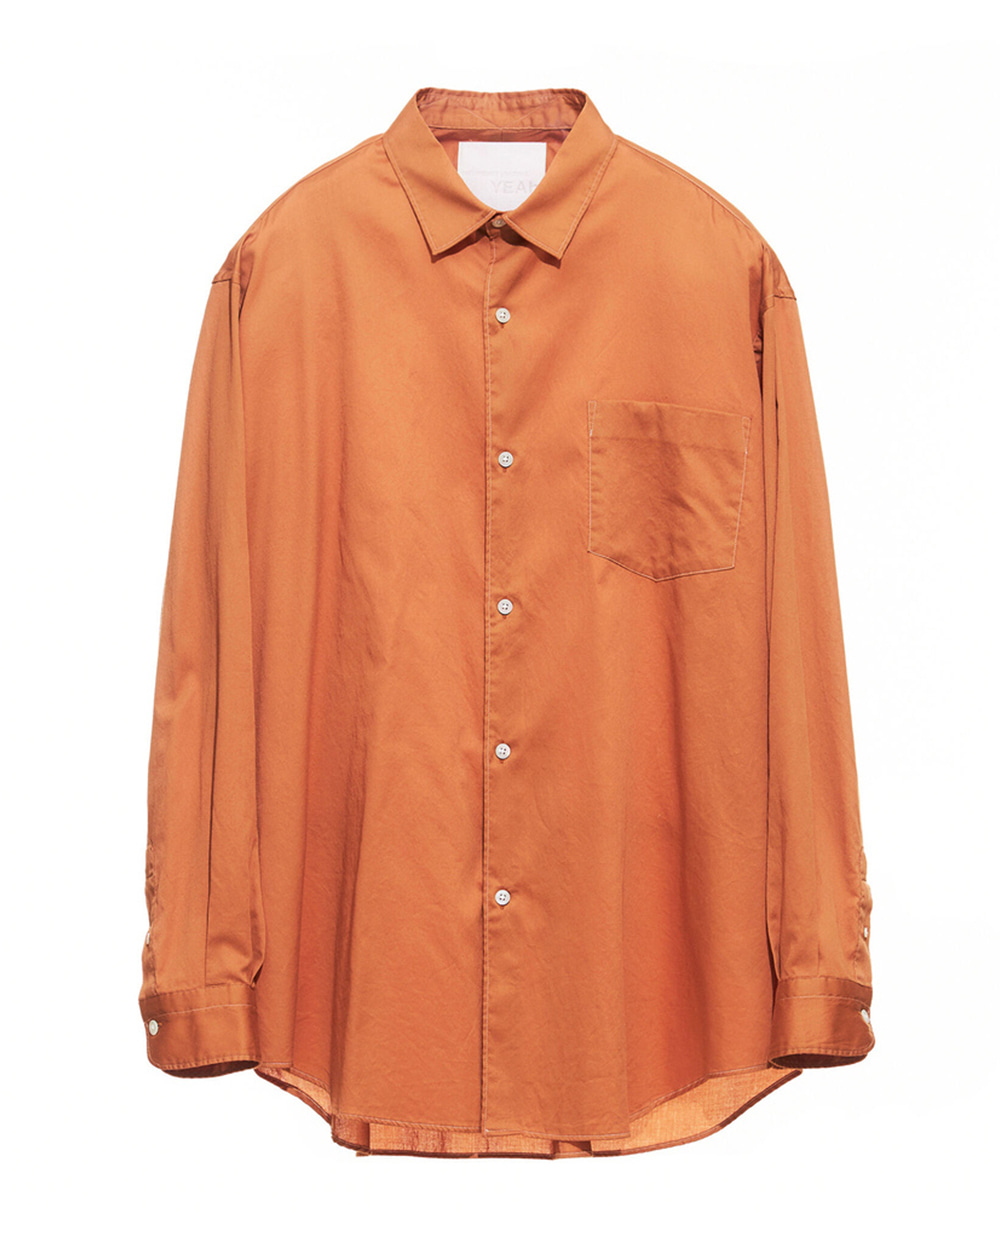 Standard Shirt (Burnt Orange)